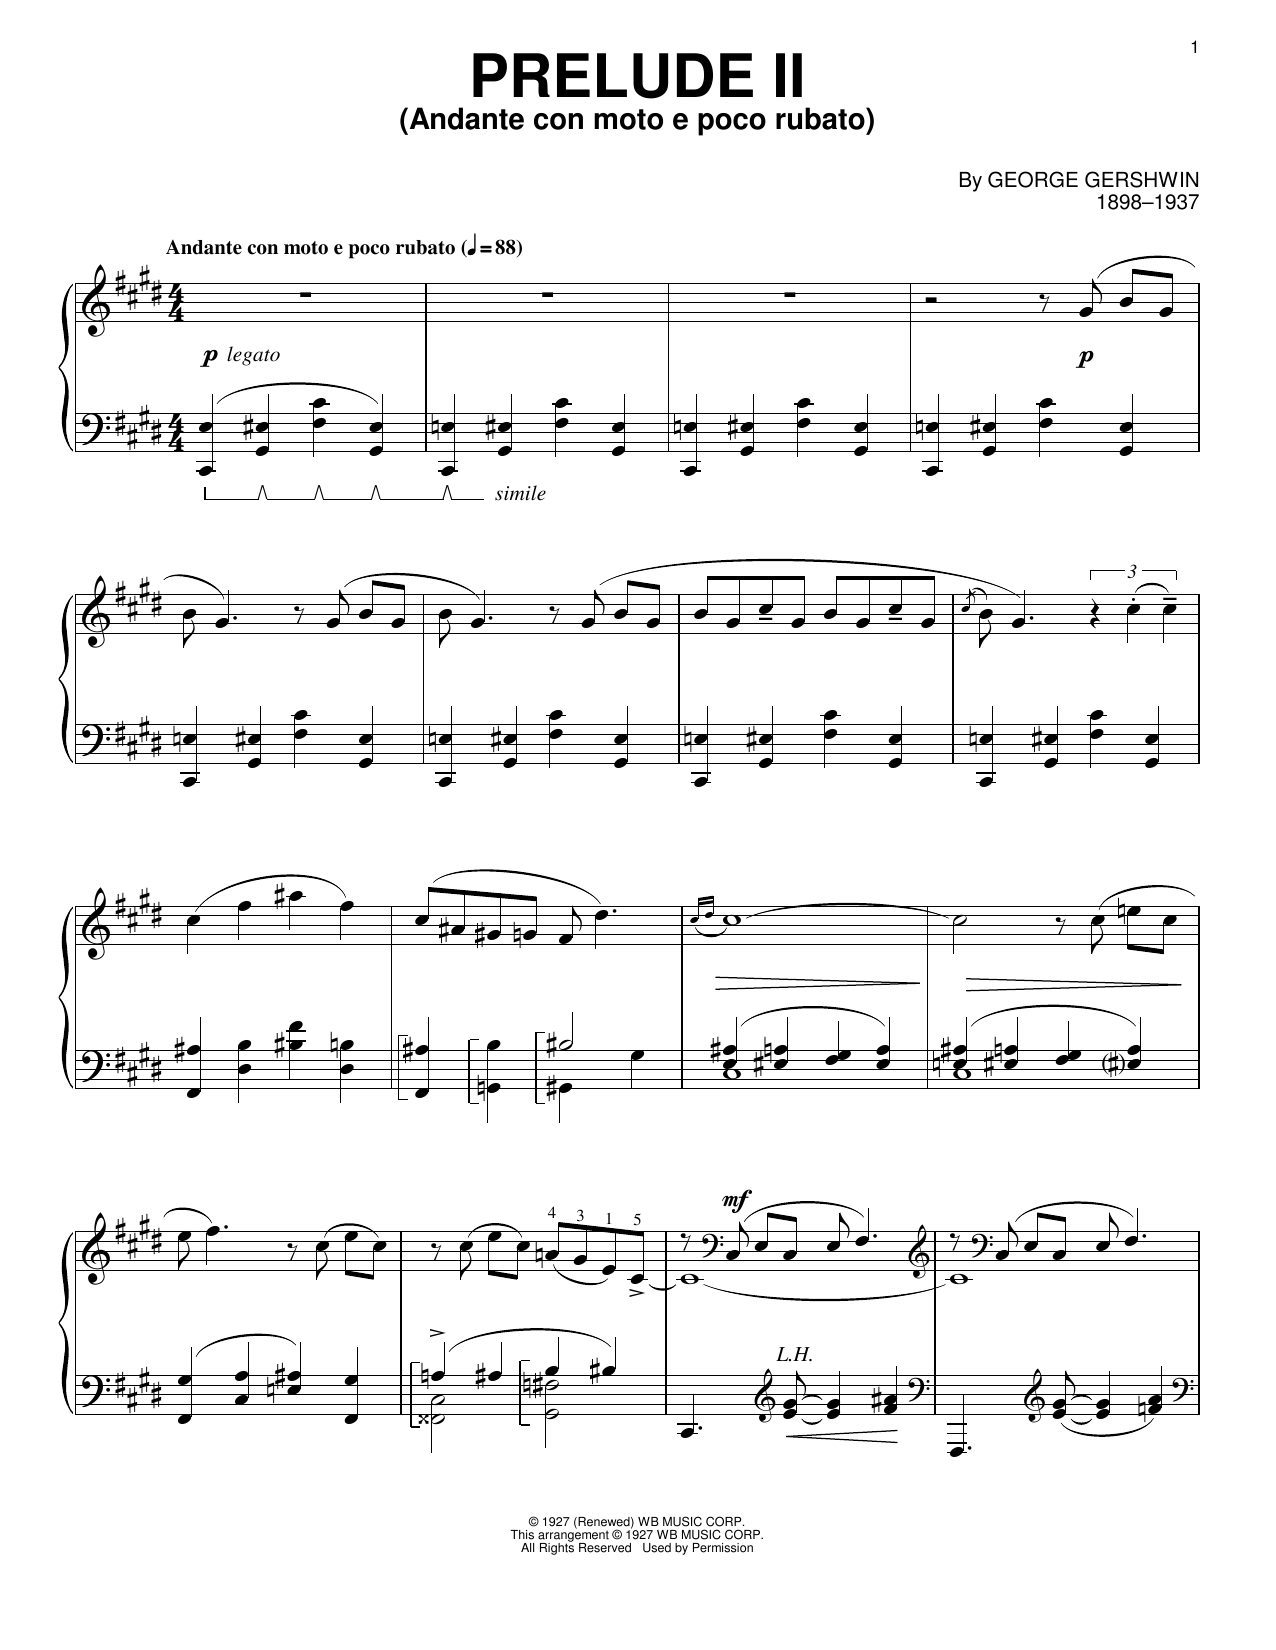 Download George Gershwin Prelude II (Andante Con Moto E Poco Rubato) Sheet Music and learn how to play Violin and Piano PDF digital score in minutes